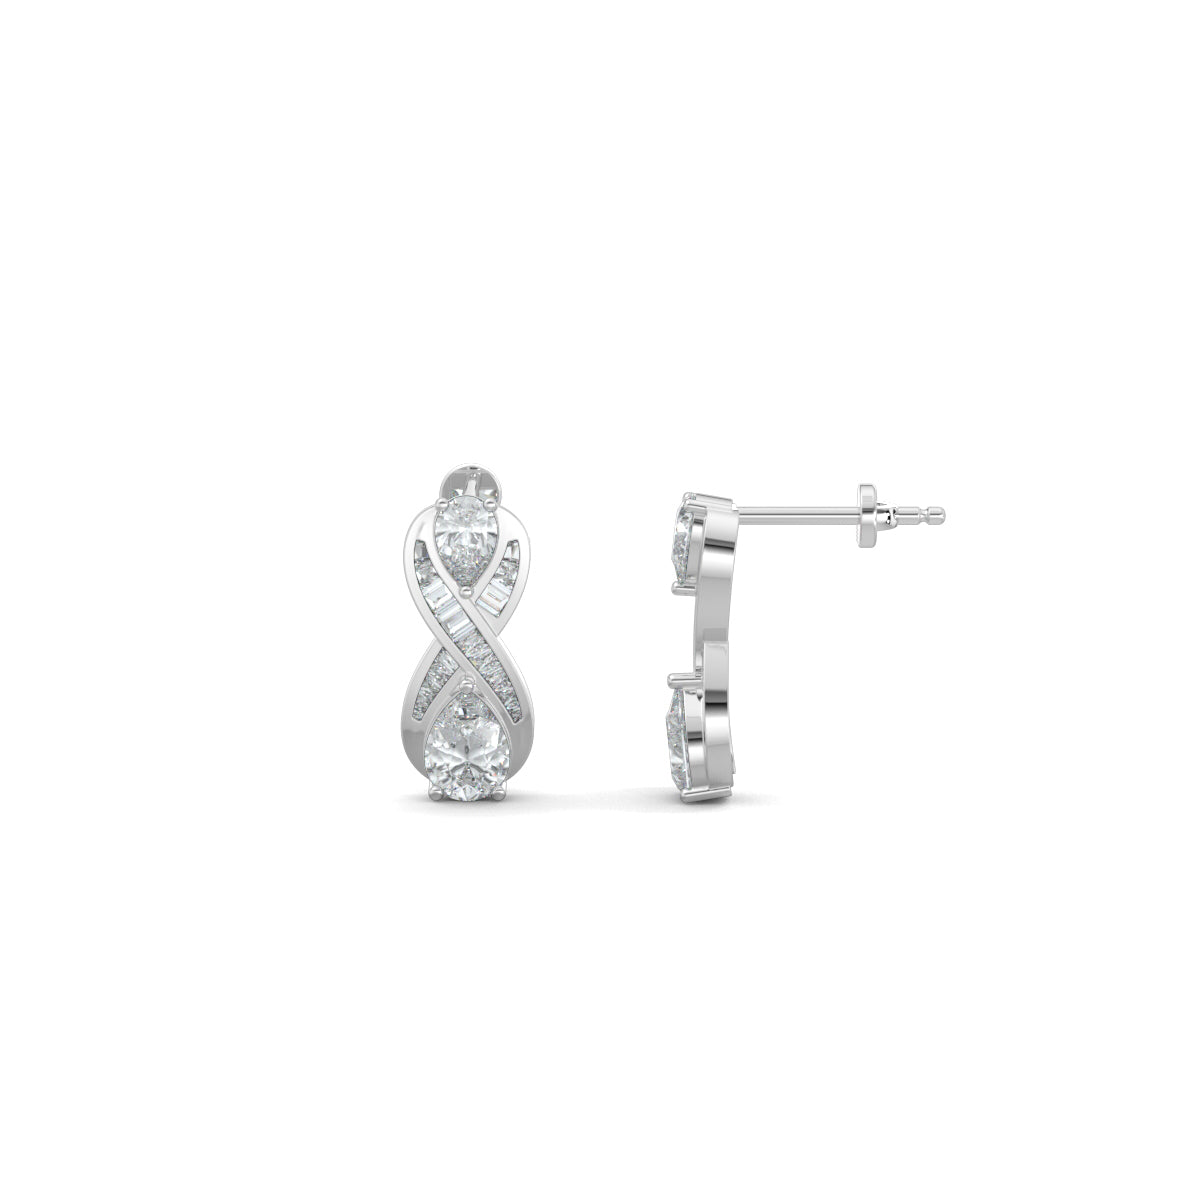 White Gold, Diamond Earrings, Natural diamond earrings, Lab-grown diamond earrings, Eight-shaped earrings, Baguette channeling, Pear diamonds, Infinite Glimmer Earrings, Sophisticated jewelry, Timeless elegance.